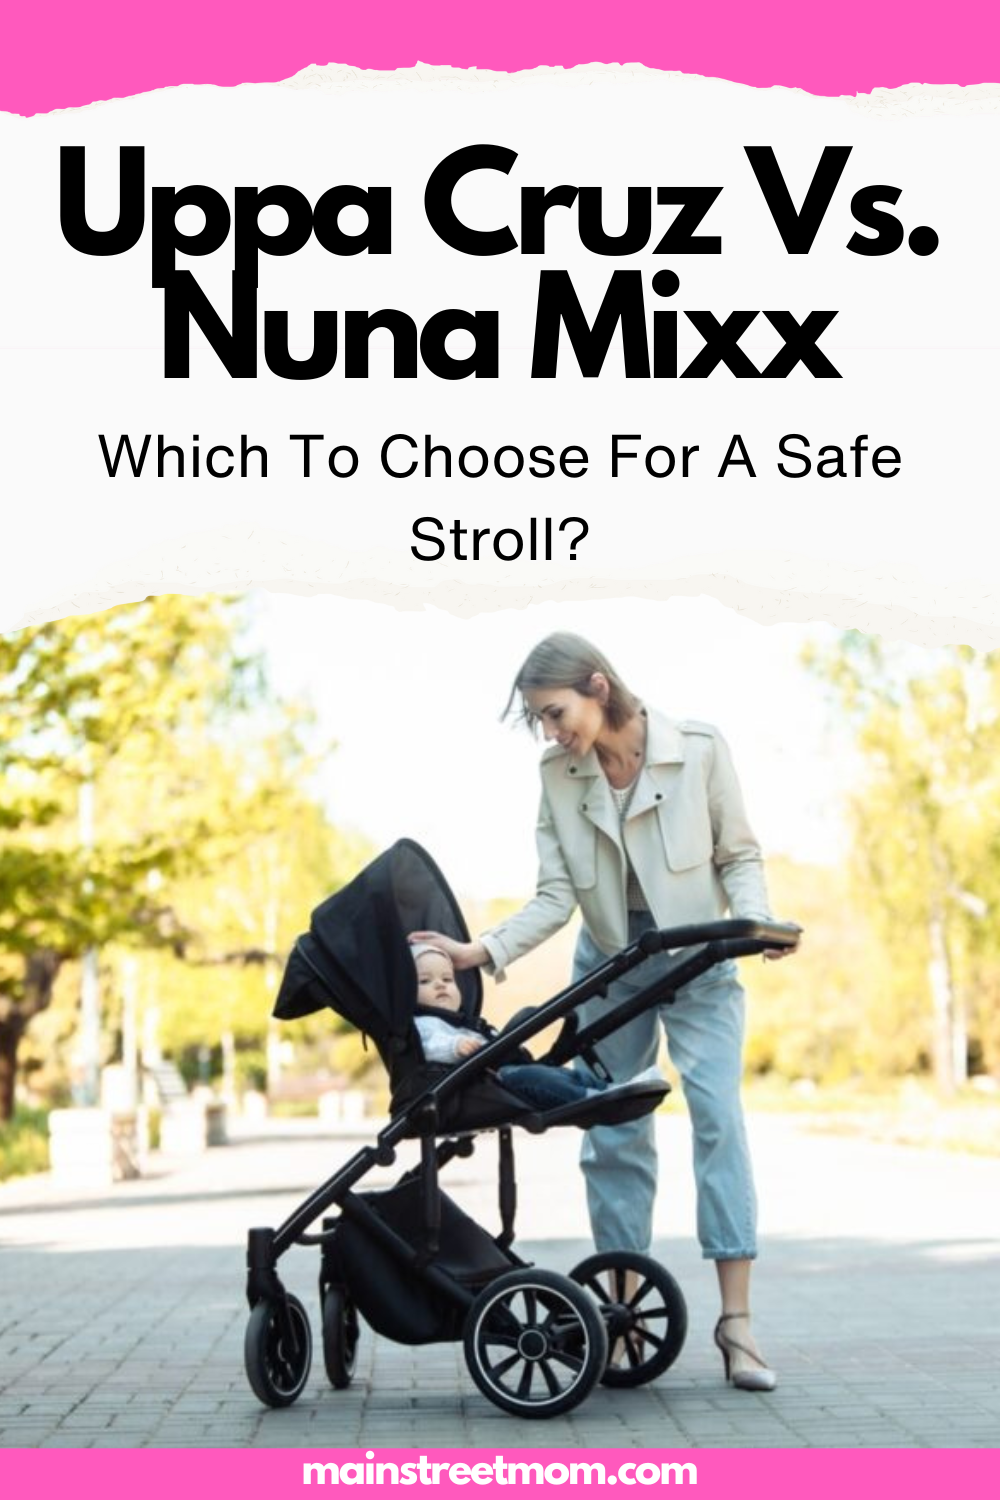 Uppa Cruz Vs. Nuna Mixx: ¿Cuál elegir para un paseo seguro?